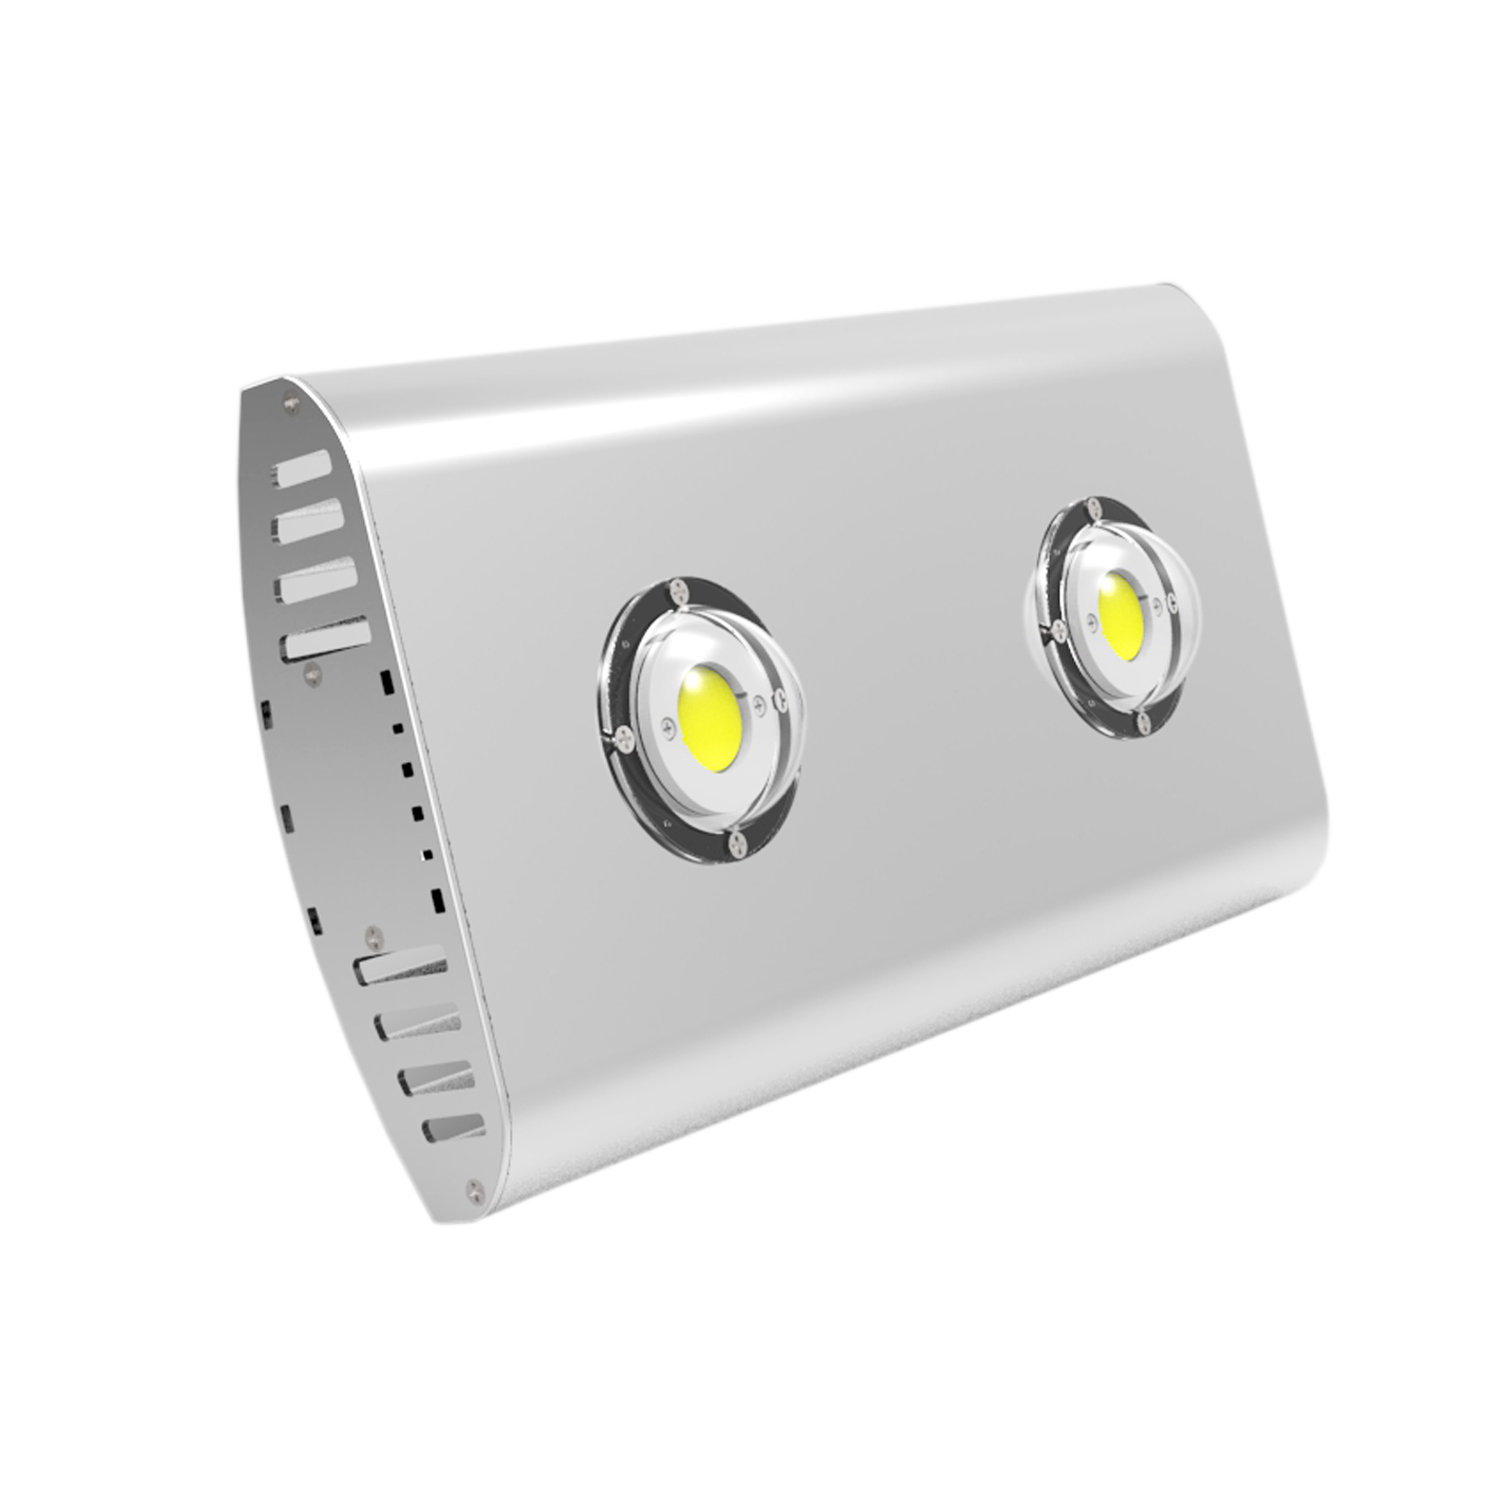 Aigostar - Confezione da 2 Faretto a LED COB, 100W, 9000LM, Impermeabile IP65, Luce Naturale 4000K[Classe di efficienza energetica A+]